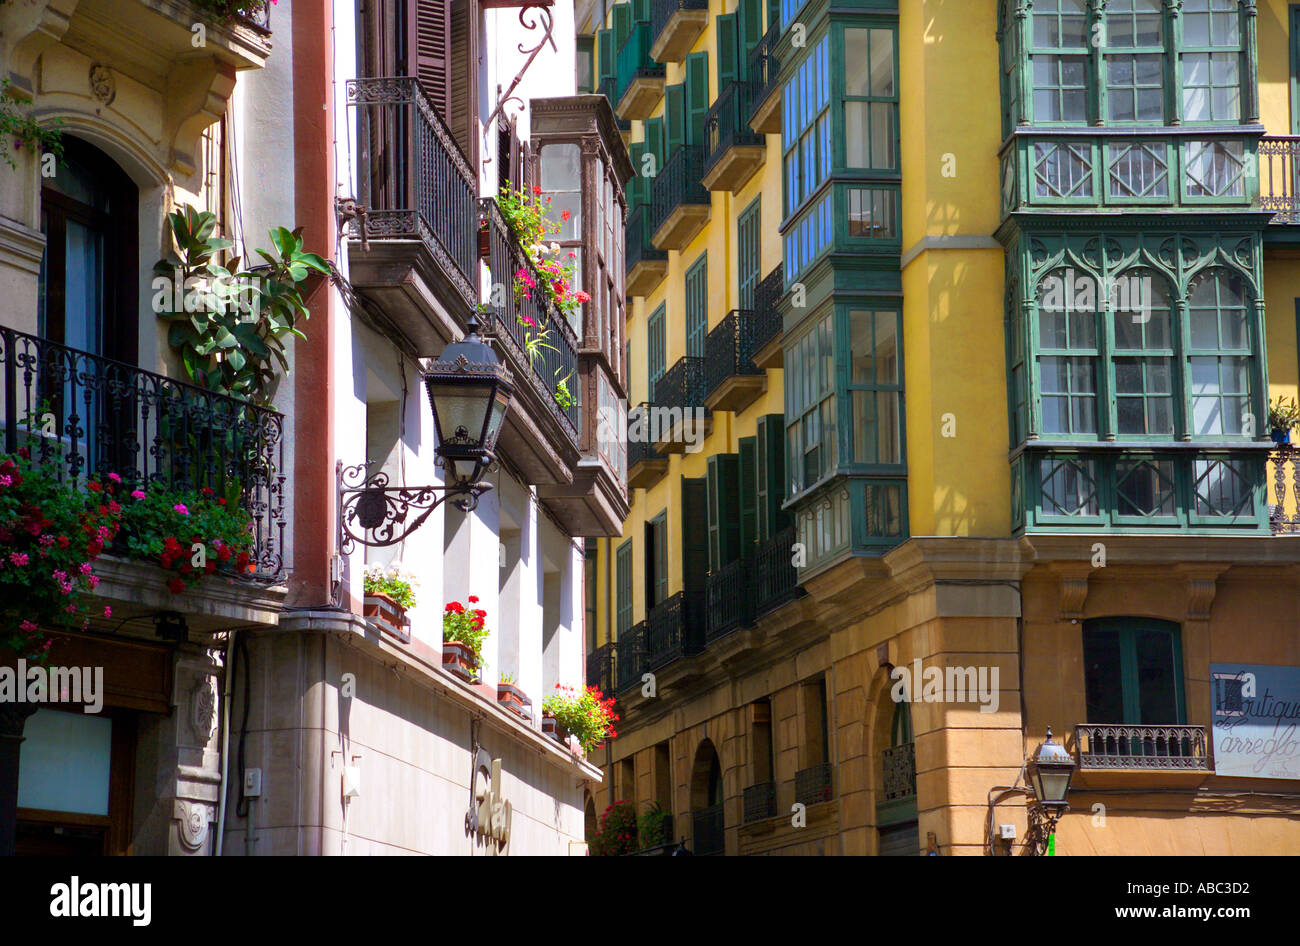 Siete Calles area, Bilbao, Basque Country, Spain Stock Photo